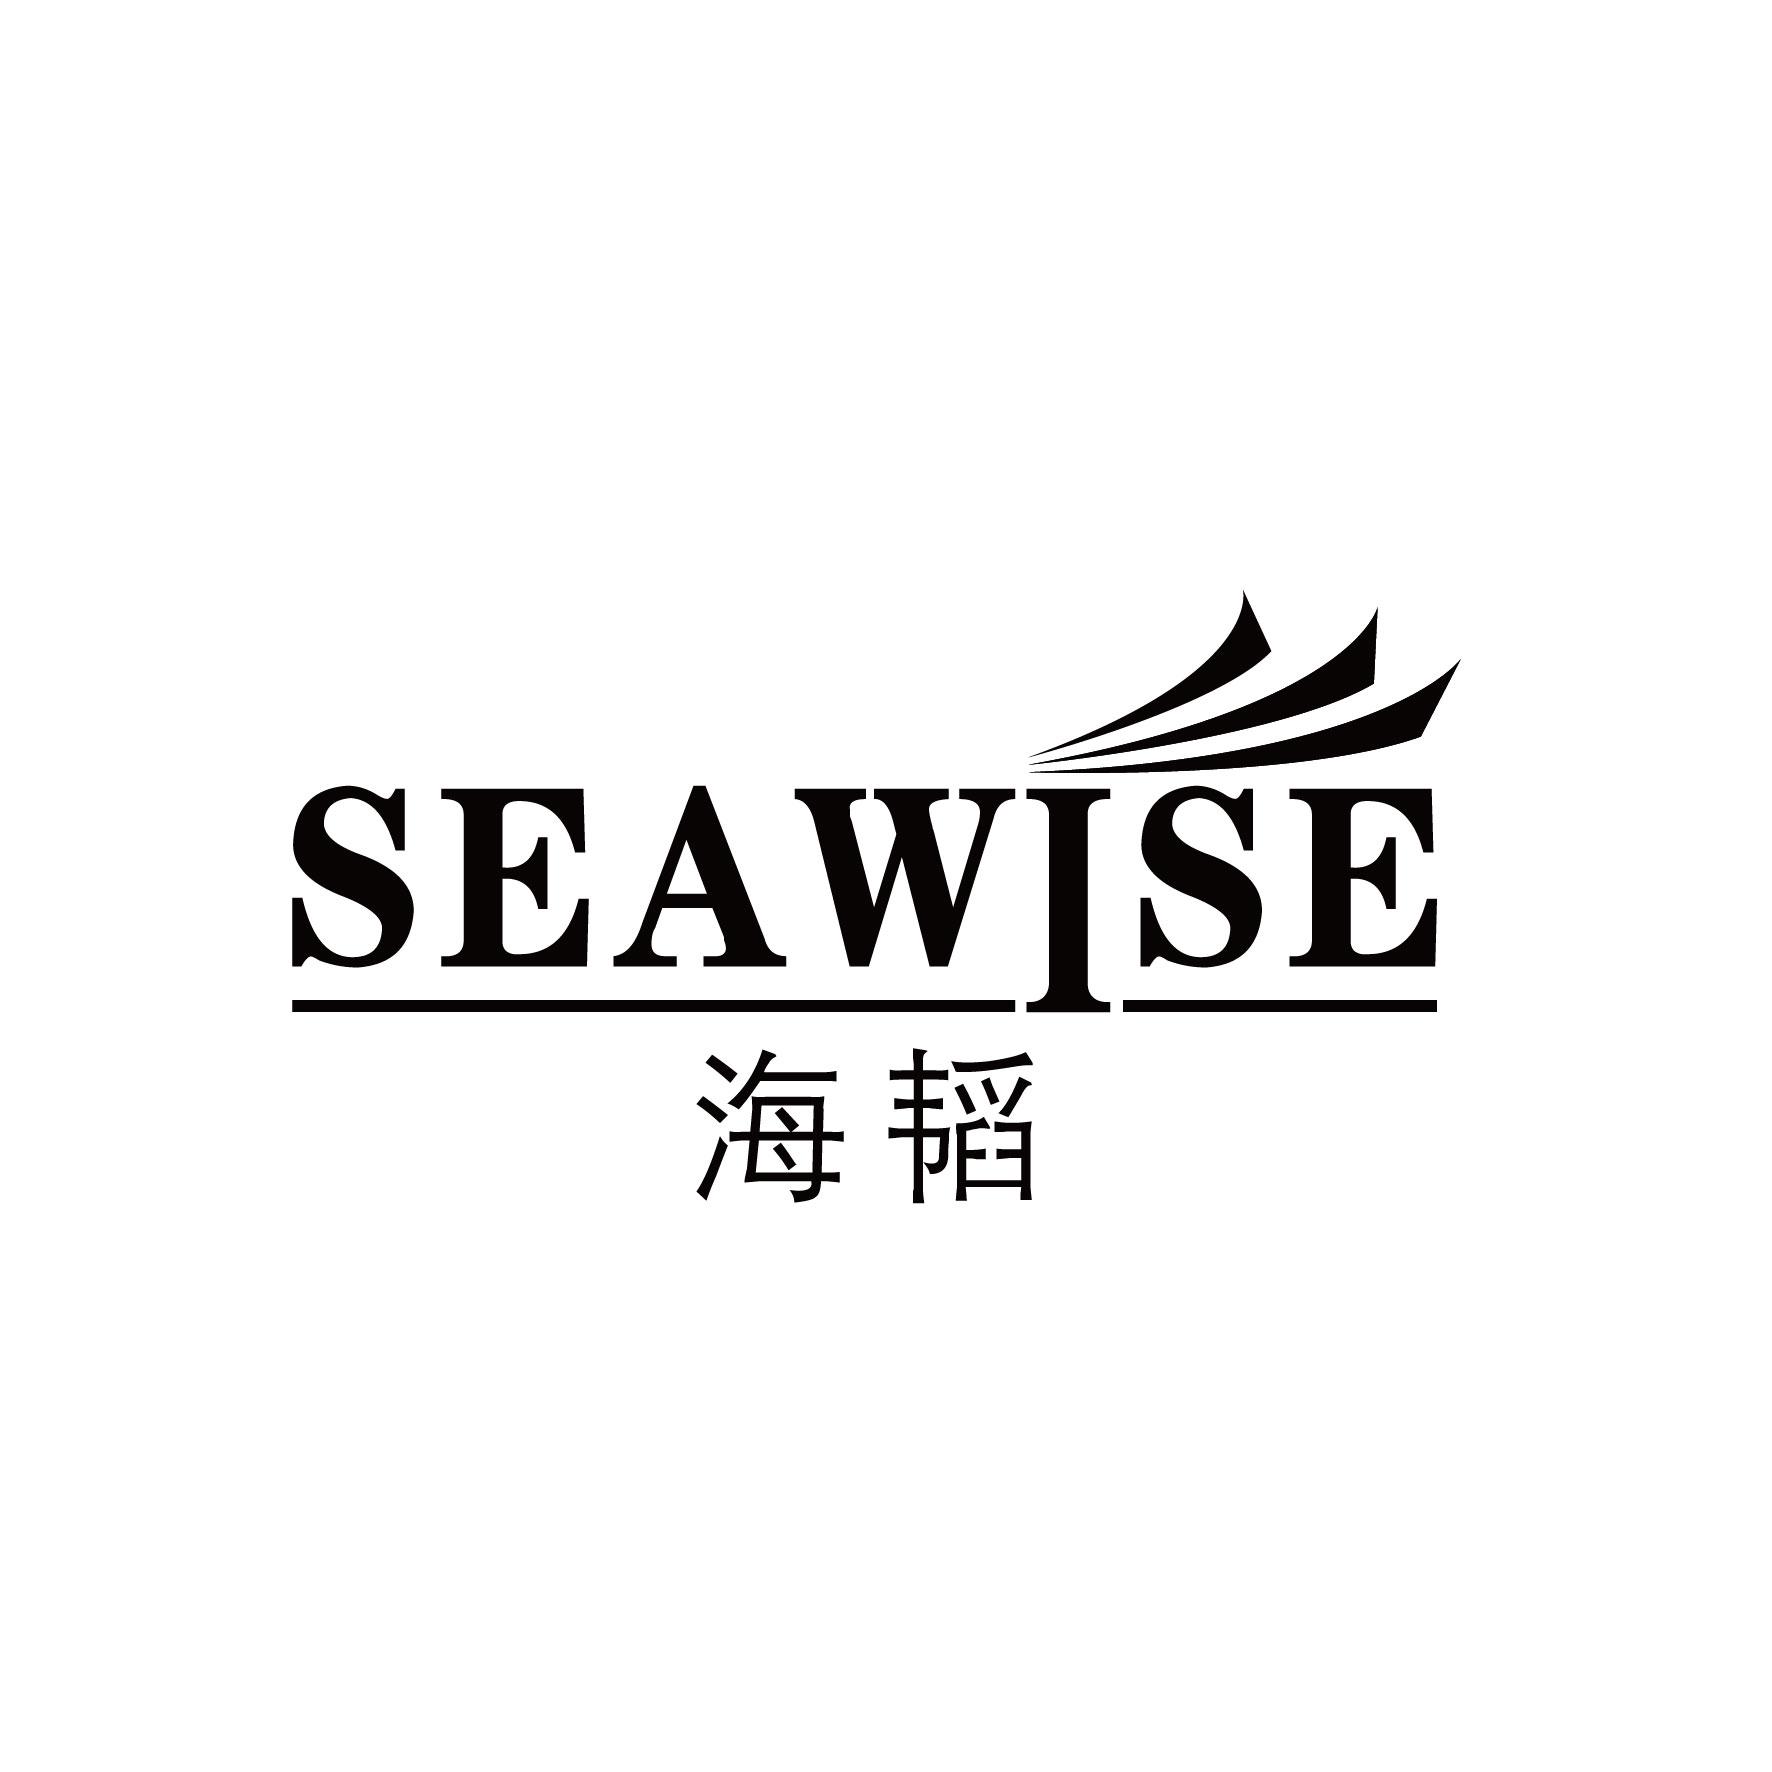  SEAWISE